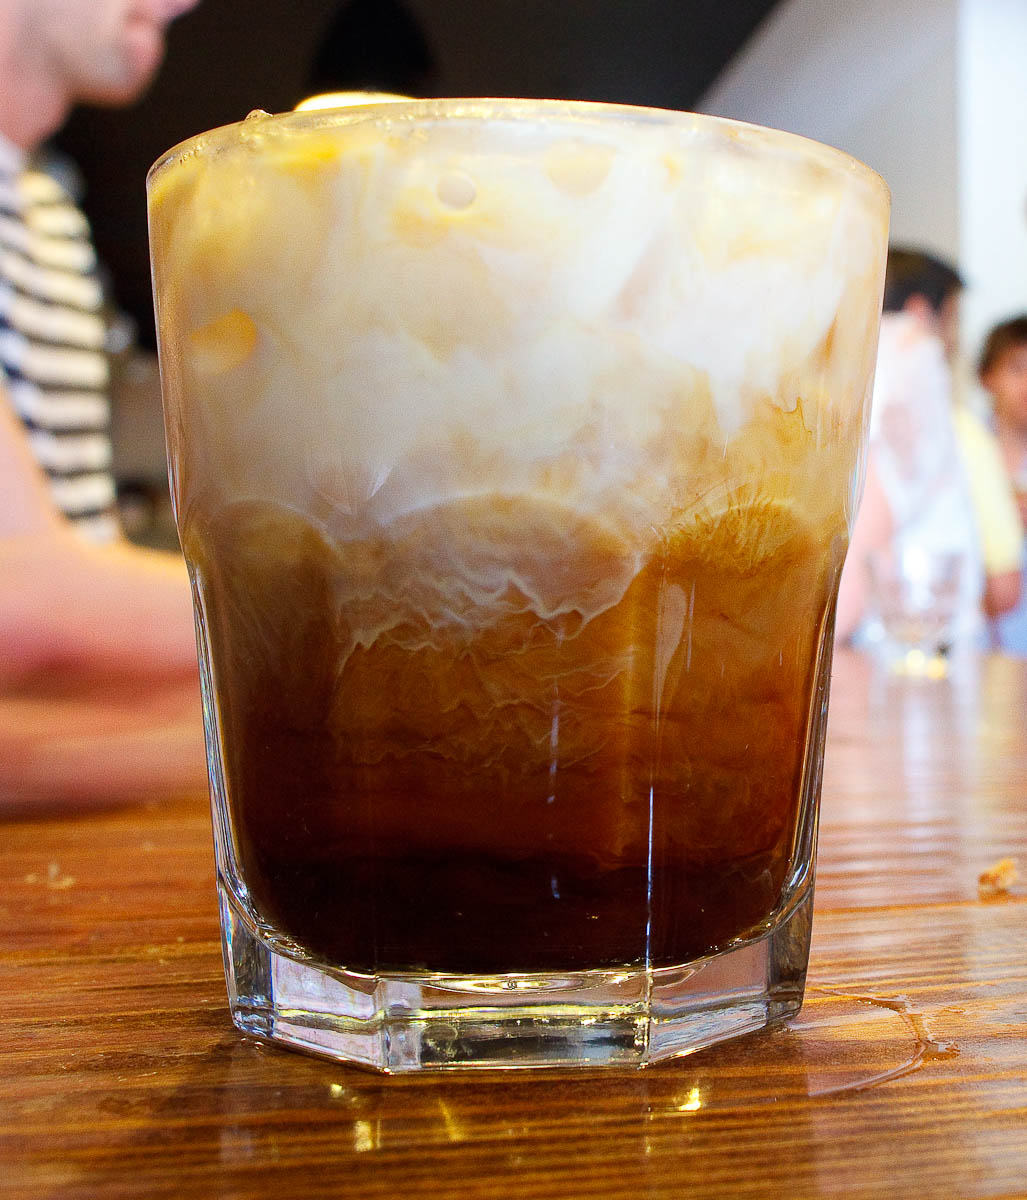 New Orleans Iced Coffee, unstirred milk